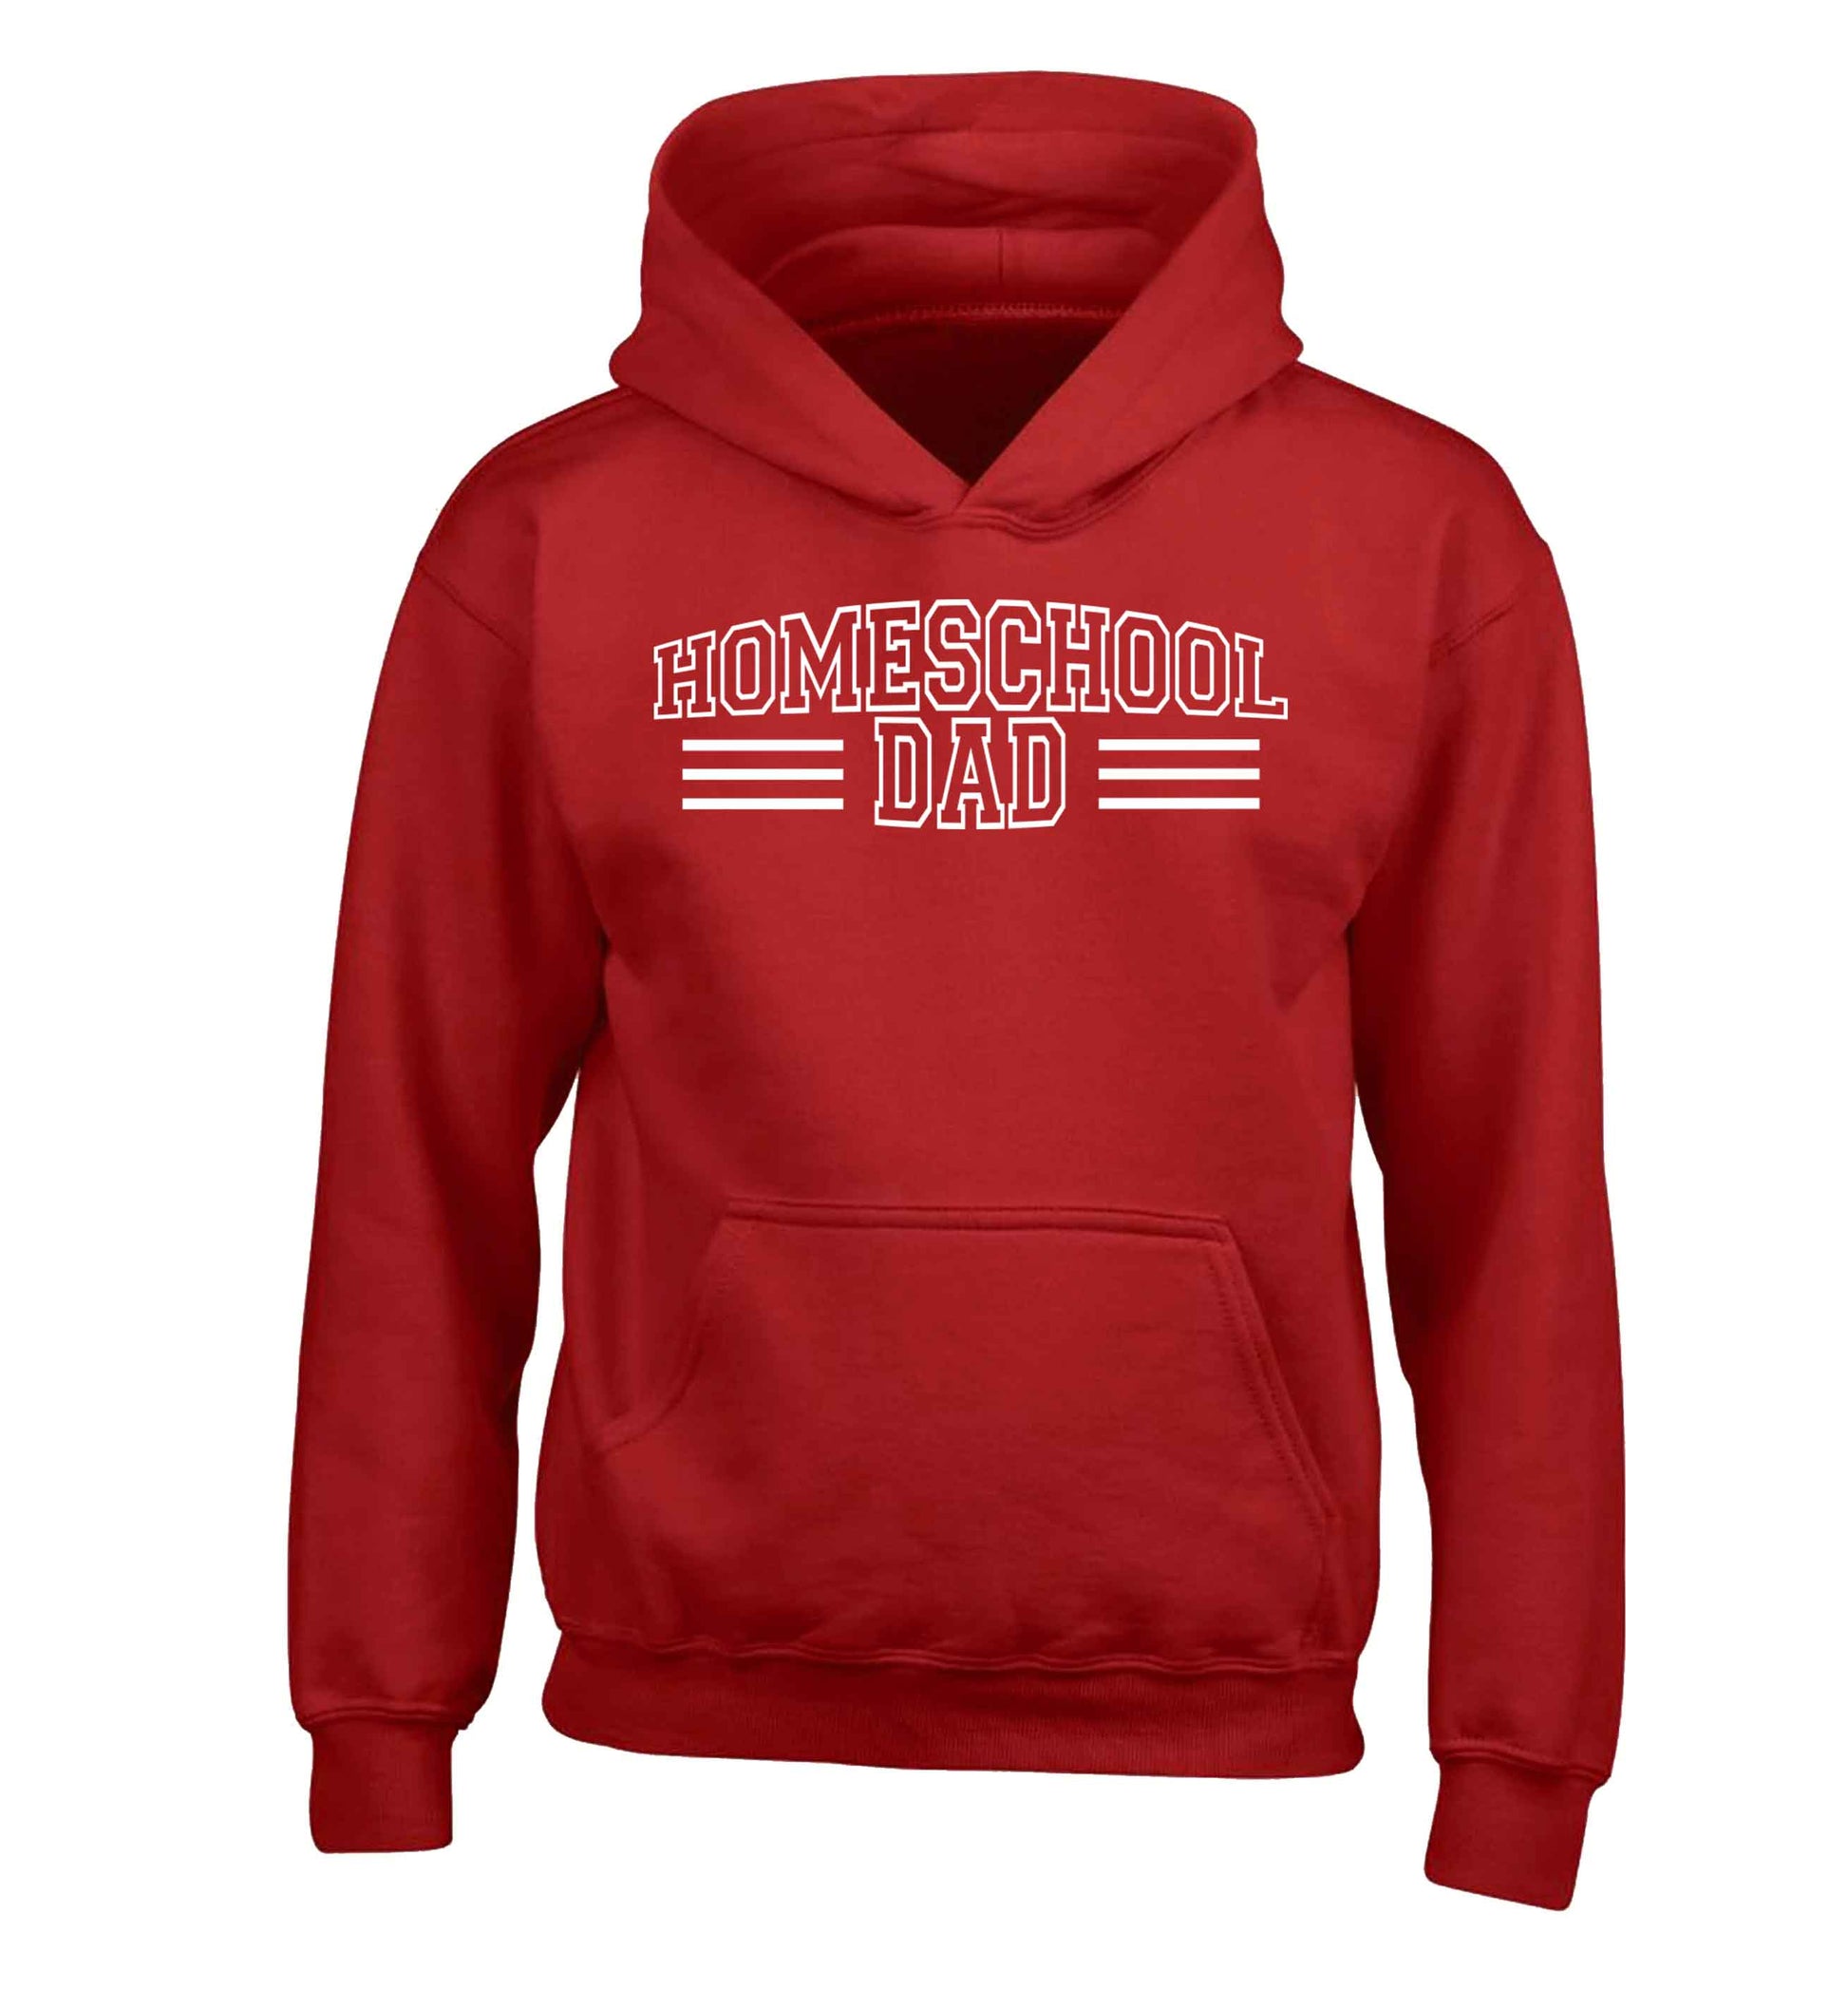 Homeschool dad children's red hoodie 12-13 Years